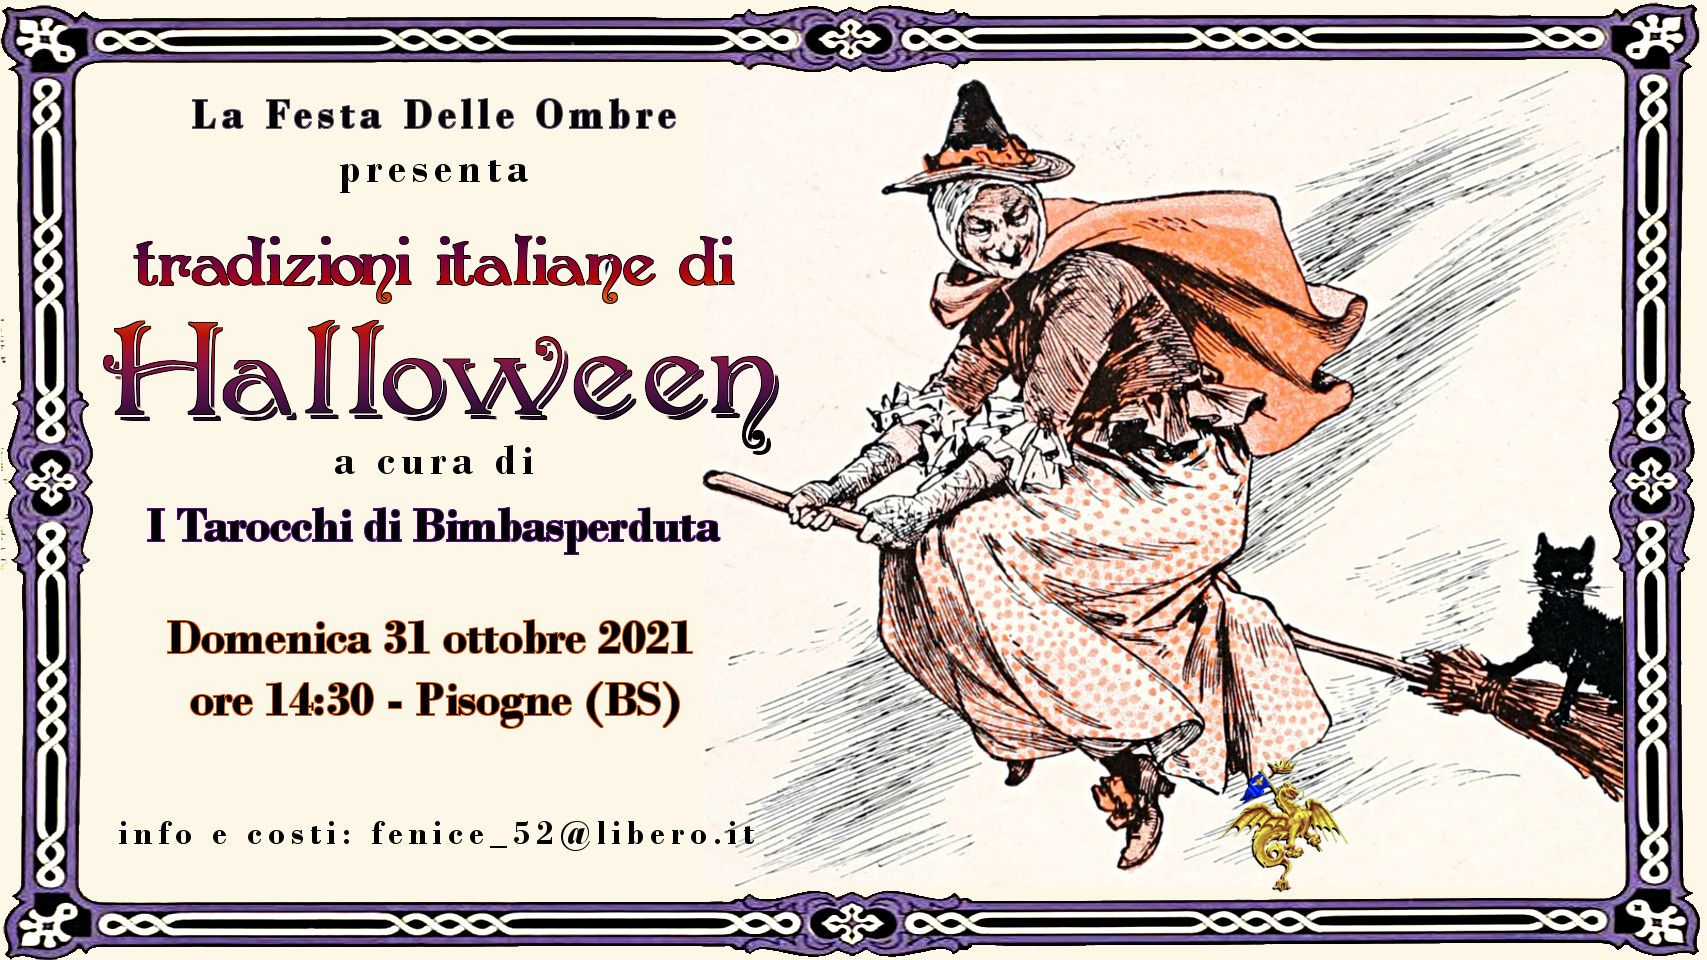 Tradizioni italiane di Halloween